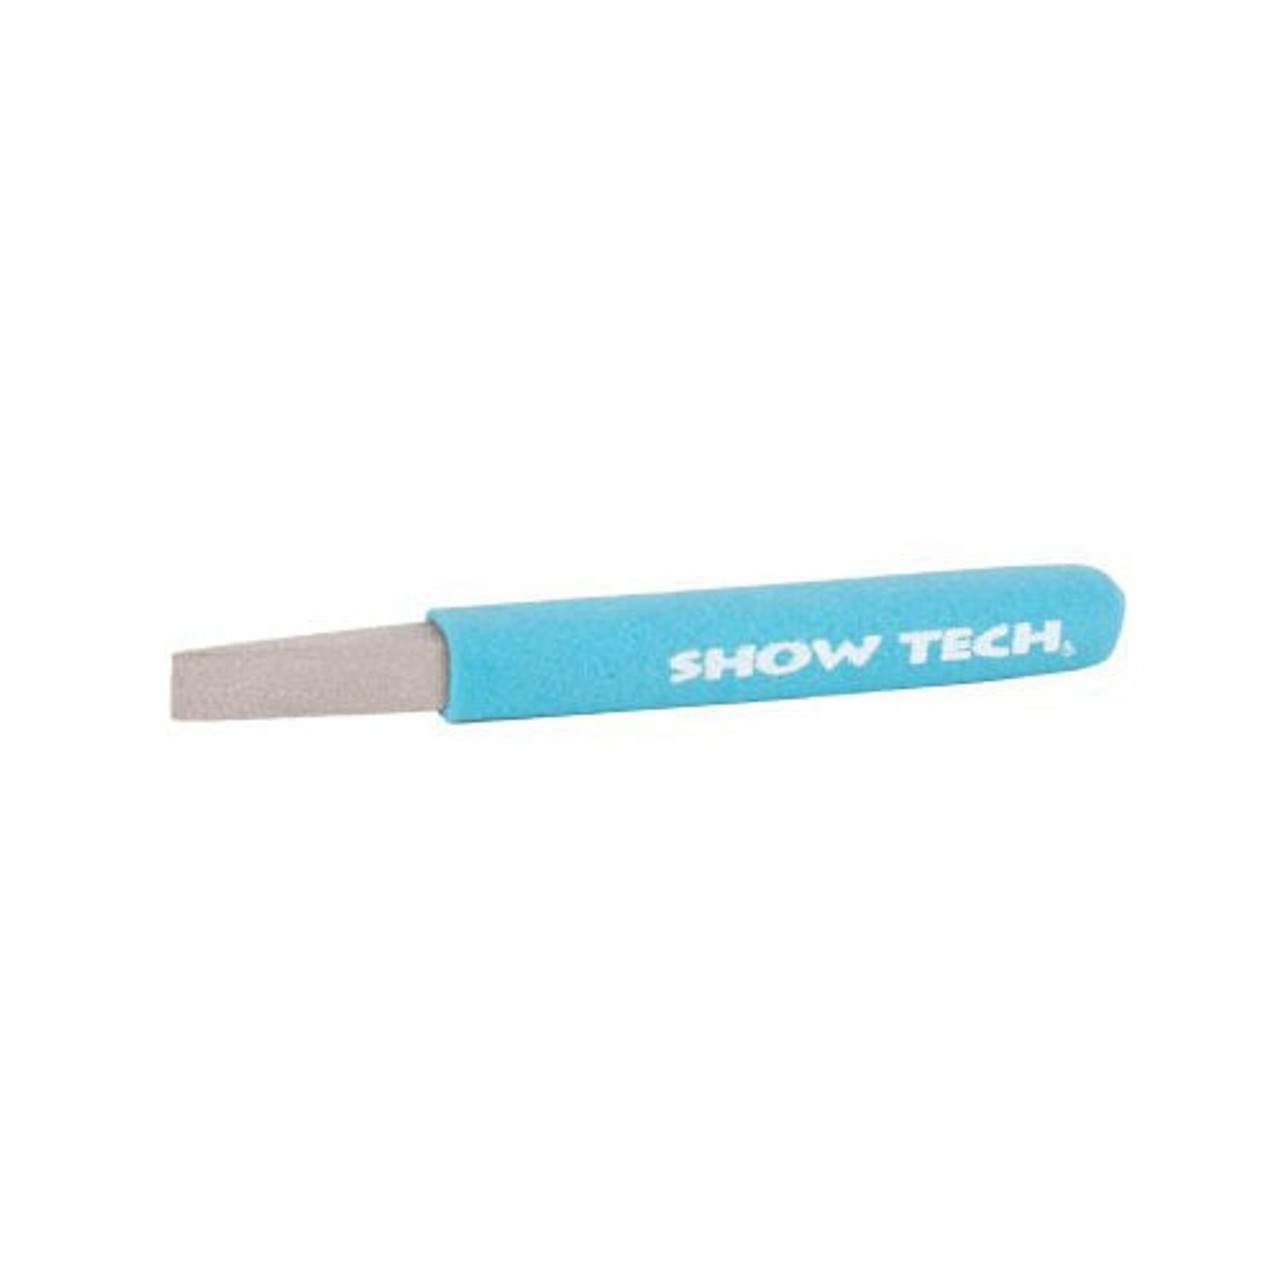 Show Tech White Tear Stain Stick